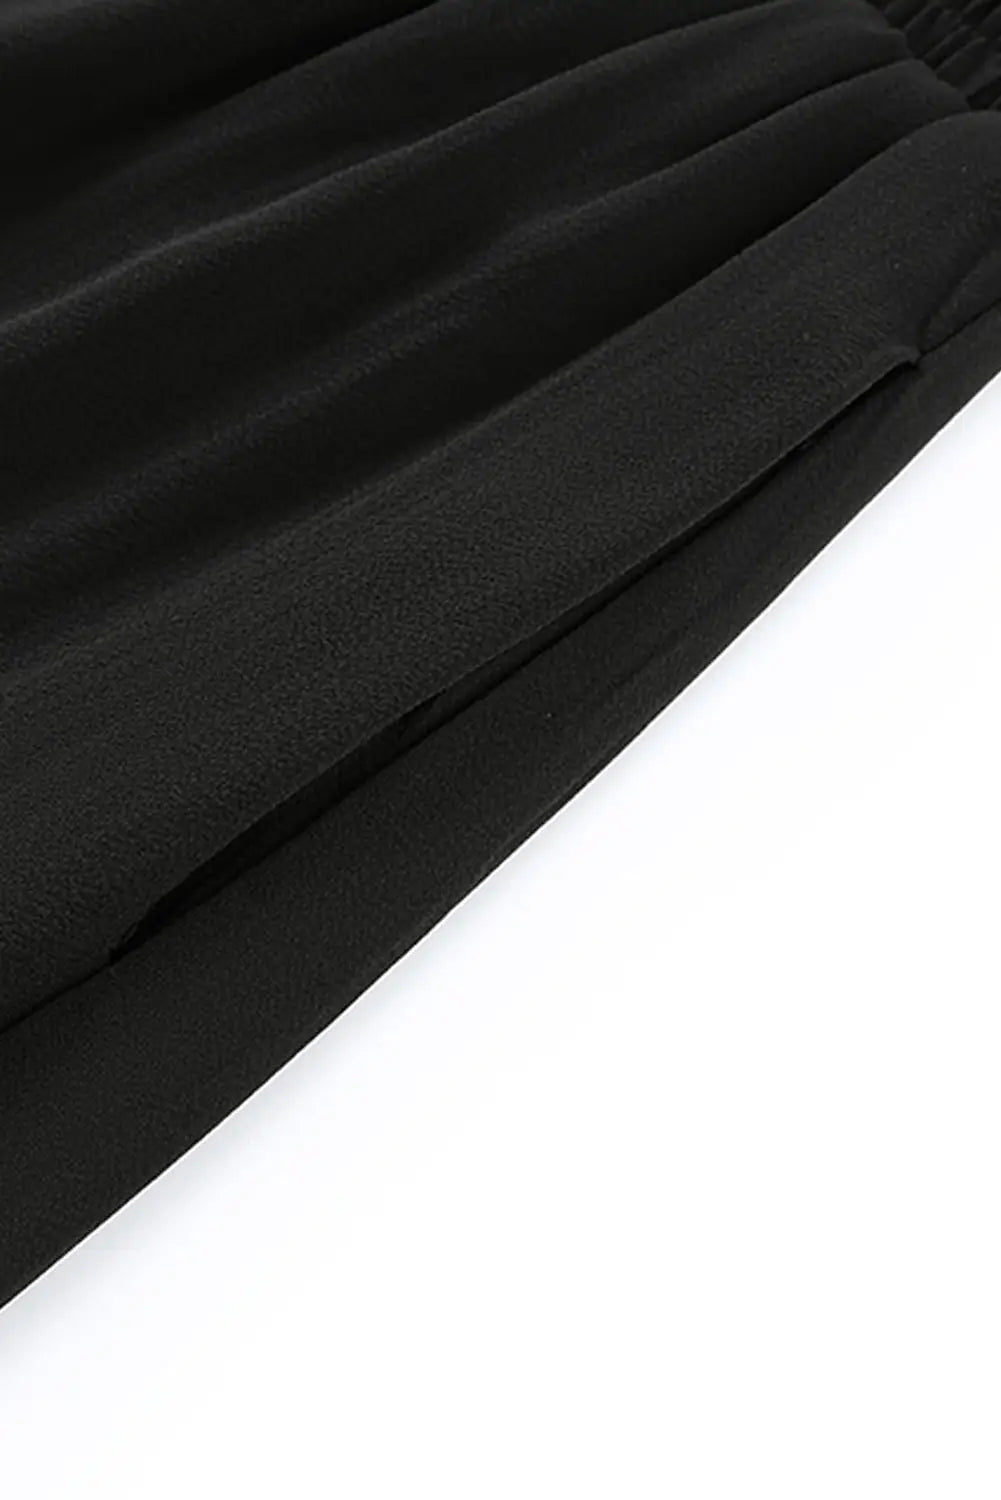 Black frill tiered drawstring waist maxi skirt - skirts